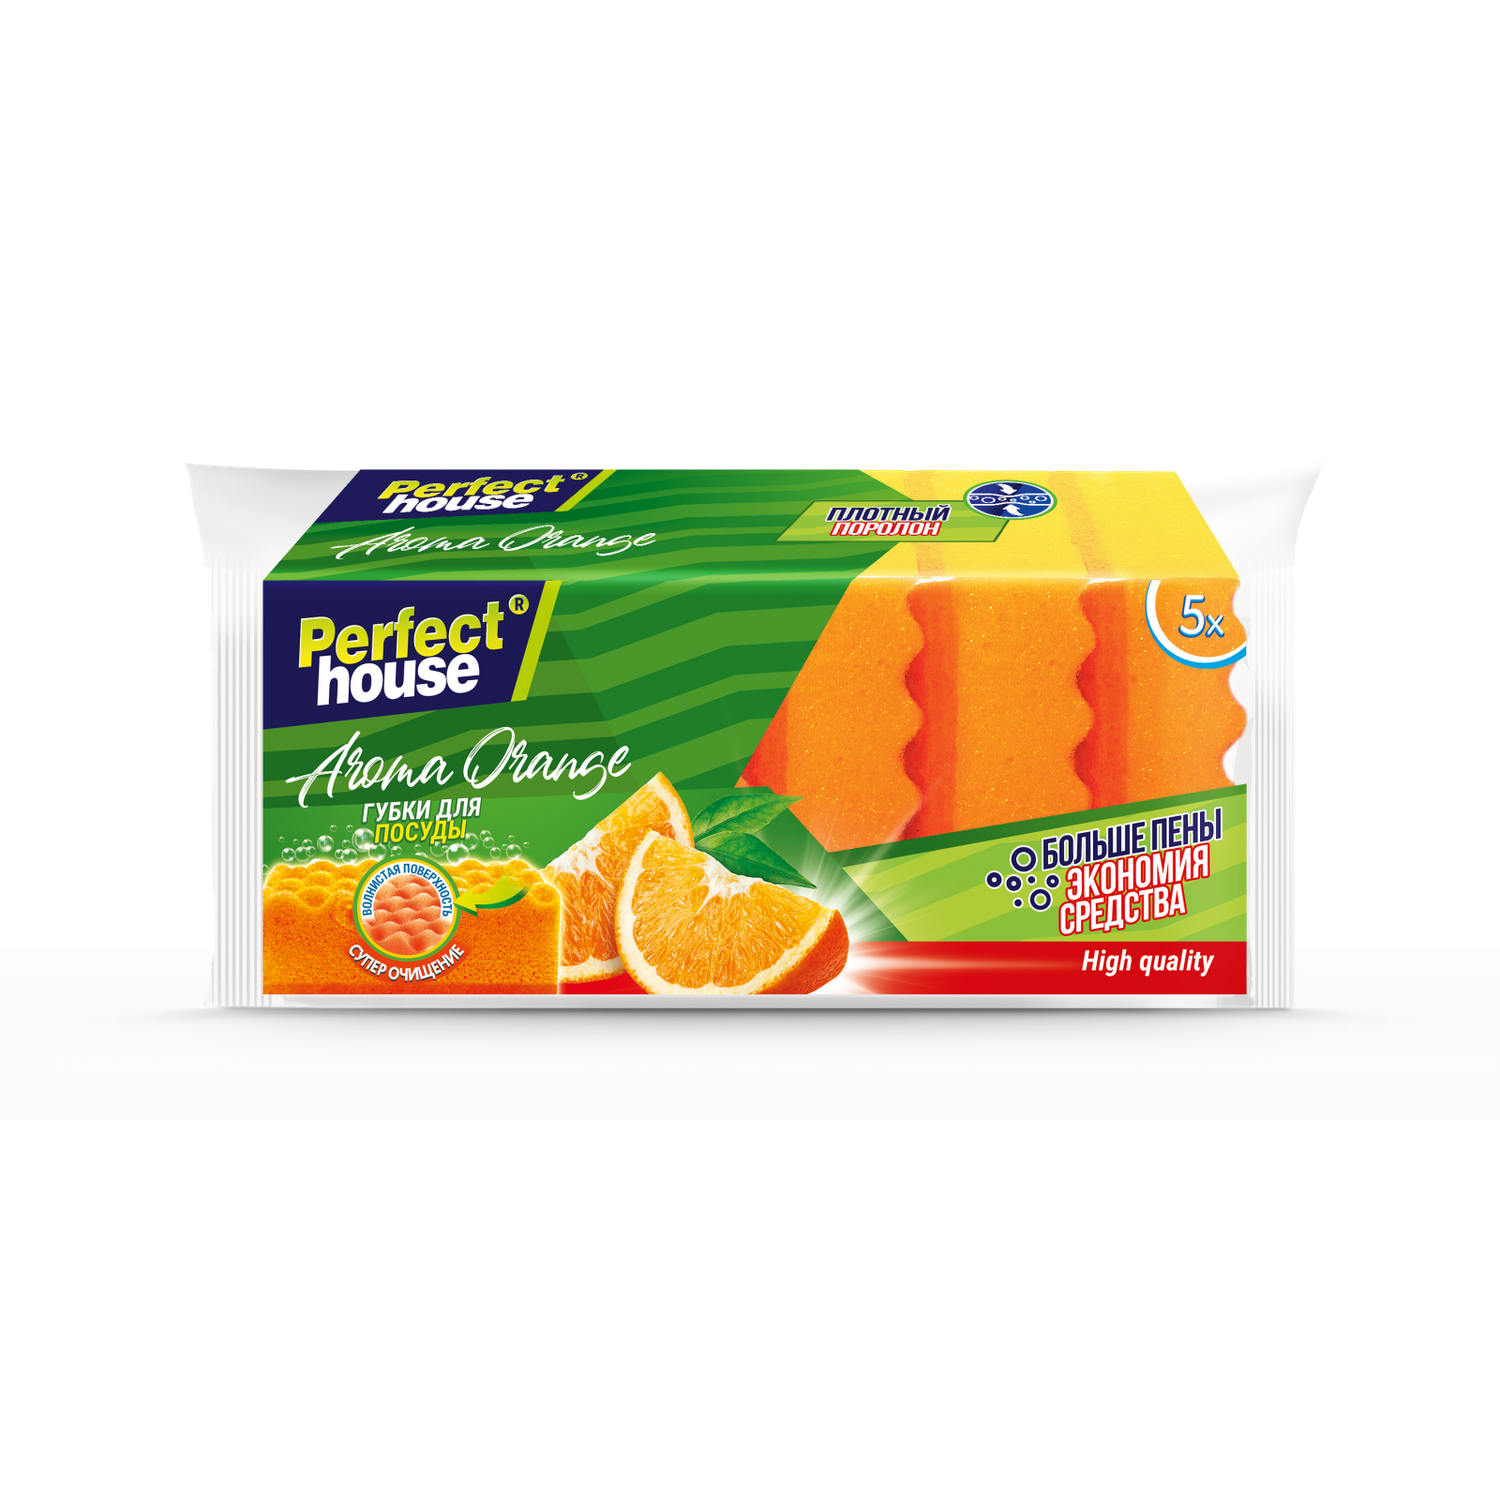 Губки Perfect House для посуды Aroma Orange 5 шт набор из 3 упаковок - фото 1